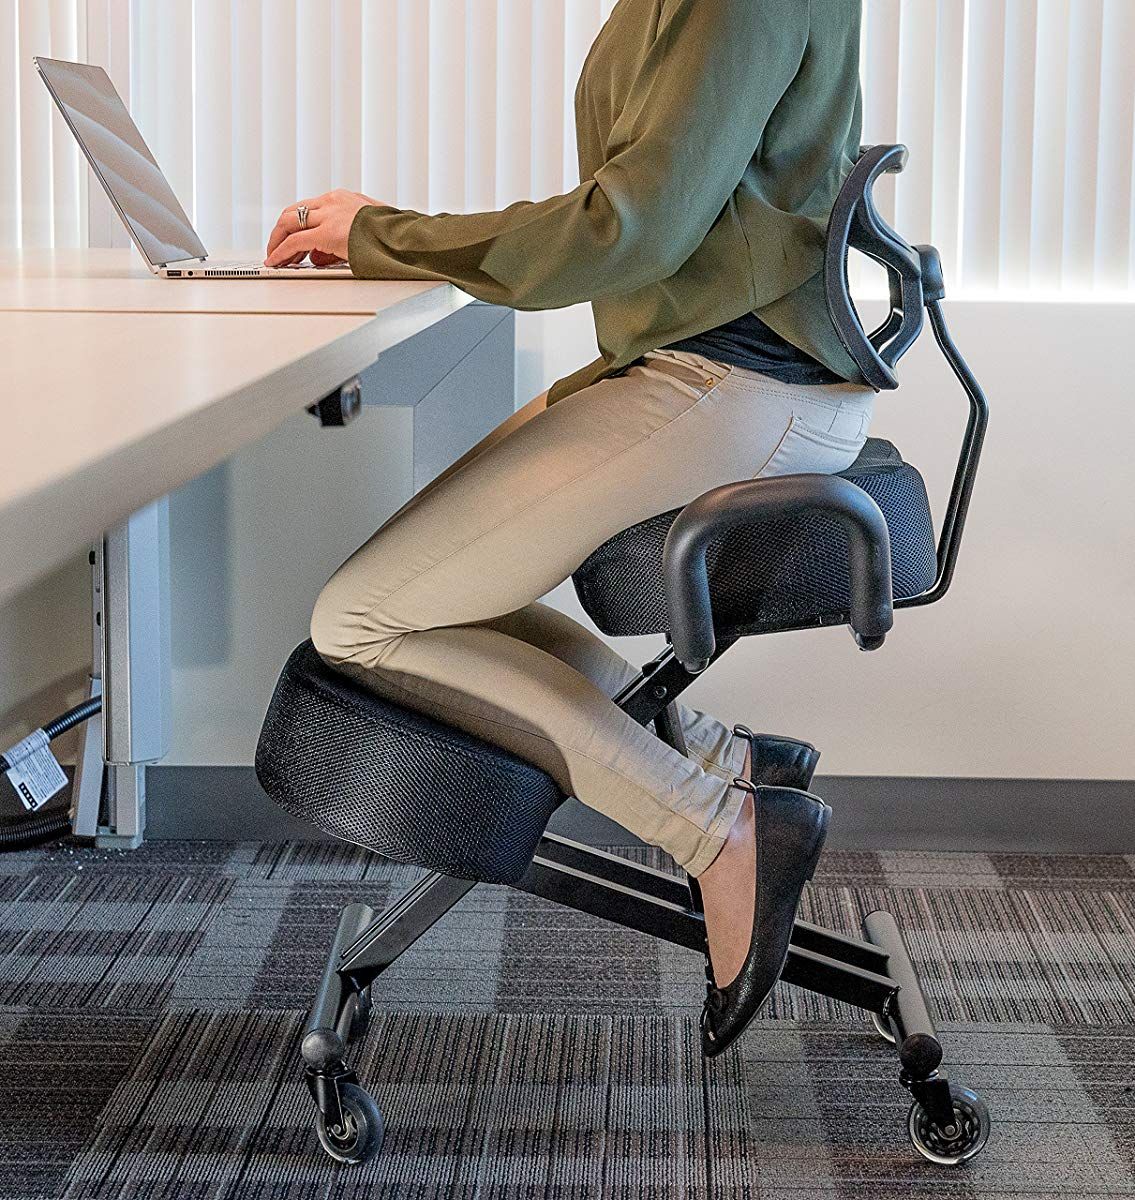 Buy Sleekform Kneeling Chair for Perfect Posture | Ergonomic Knee Stool Relievin...